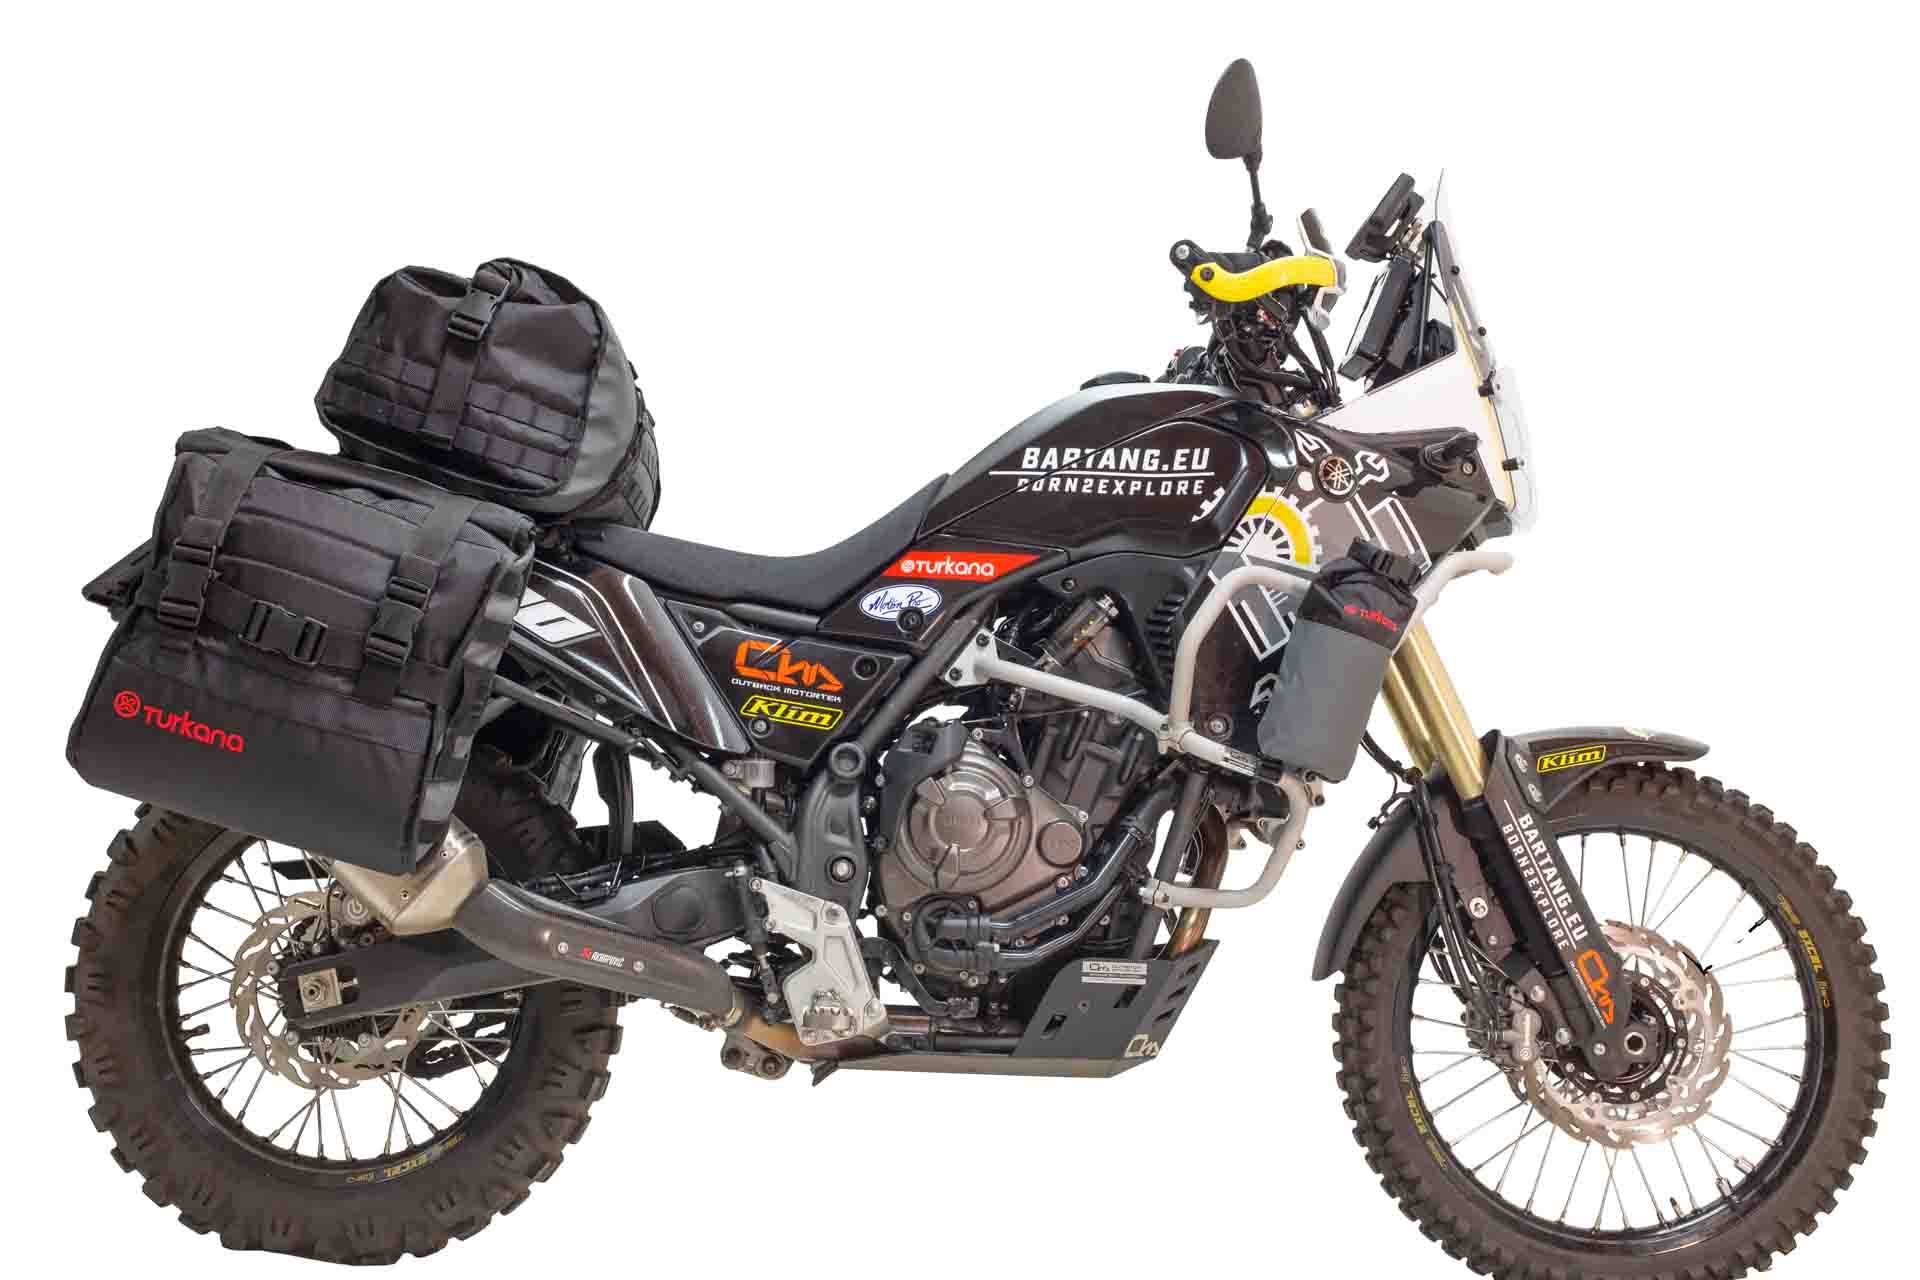 Turkanagear_HippoHips_30L_each_motorcycle_soft_luggage_waterproof_dustproof_inner_dry_bags1